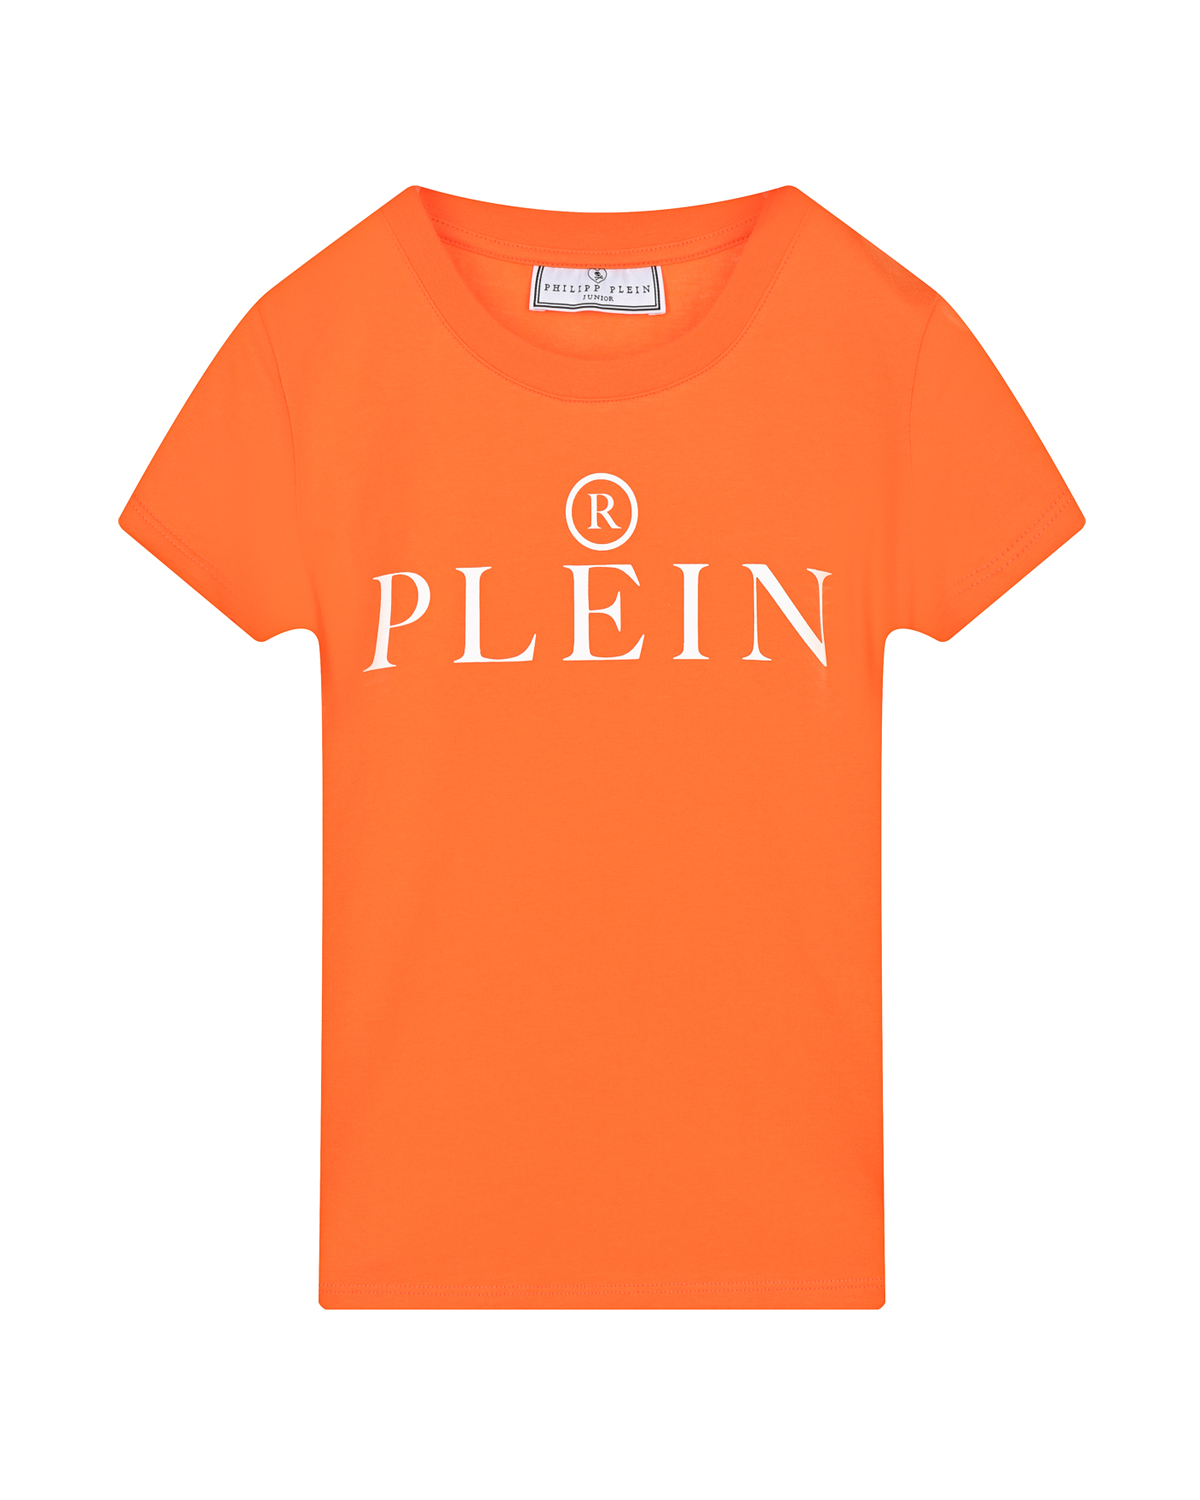 Оранжевая футболка с белым лого Philipp Plein